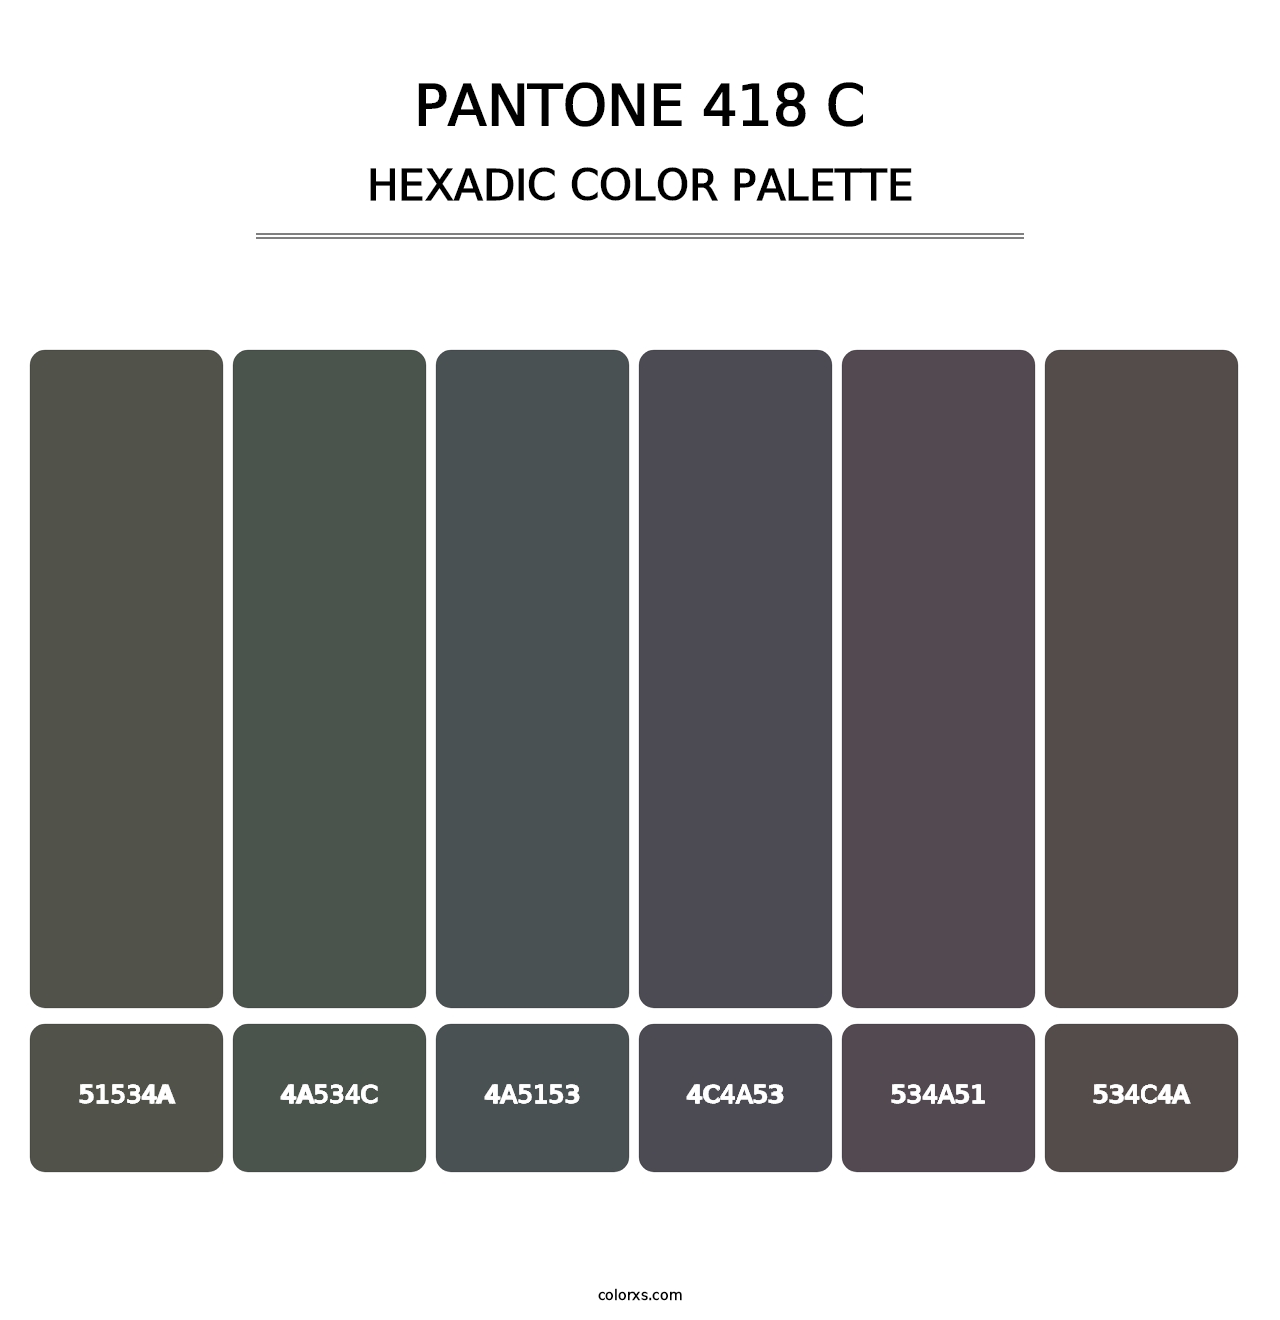 PANTONE 418 C - Hexadic Color Palette